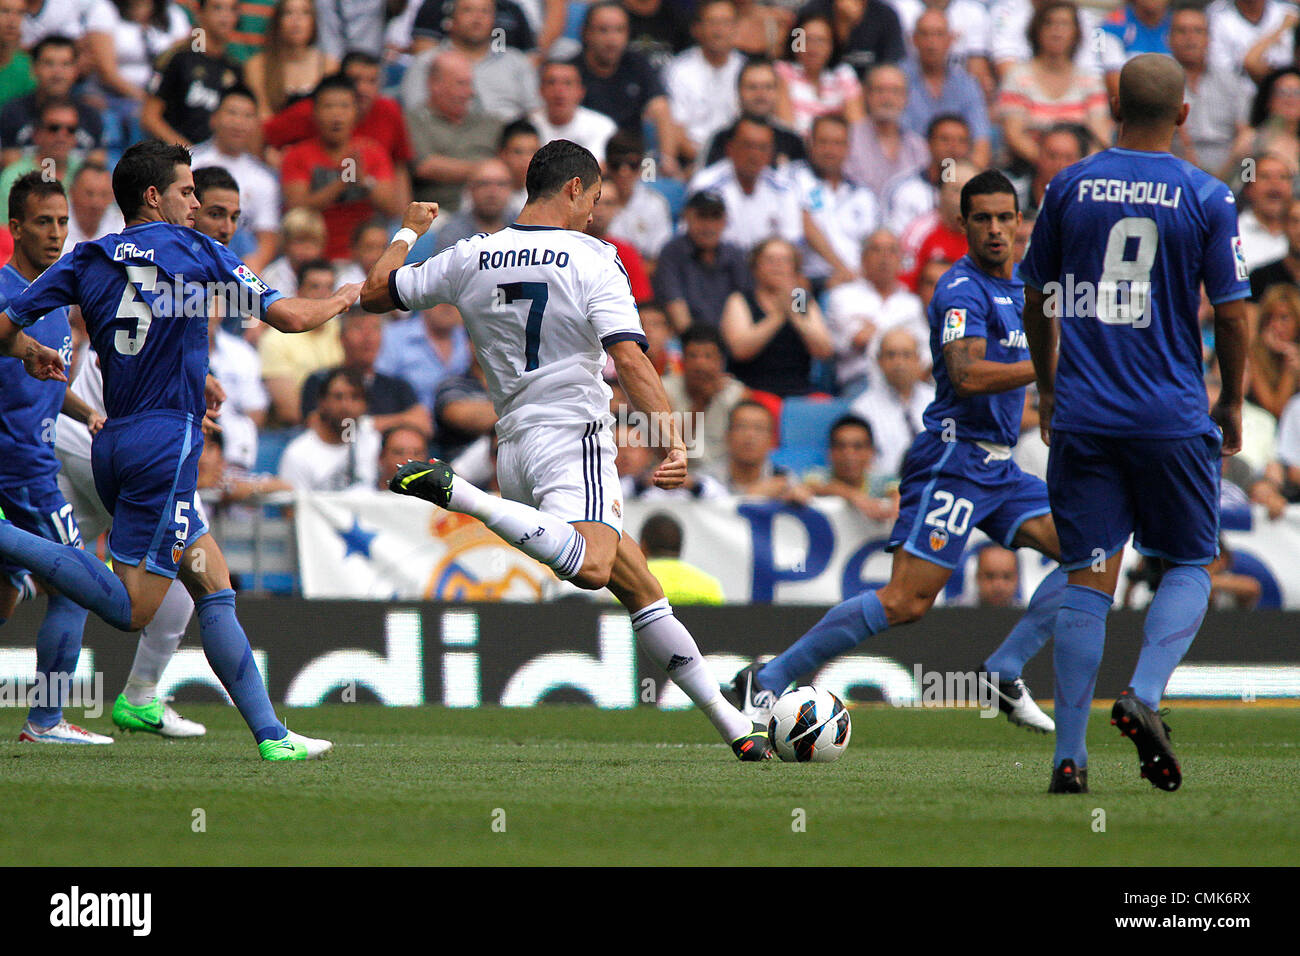 19.08.2012 Madrid, Spanien. La Liga Fußball Real Madrid vs. Valencia CF - Cristiano Ronaldo bekommt seine Chance entfernt unter Druck Stockfoto